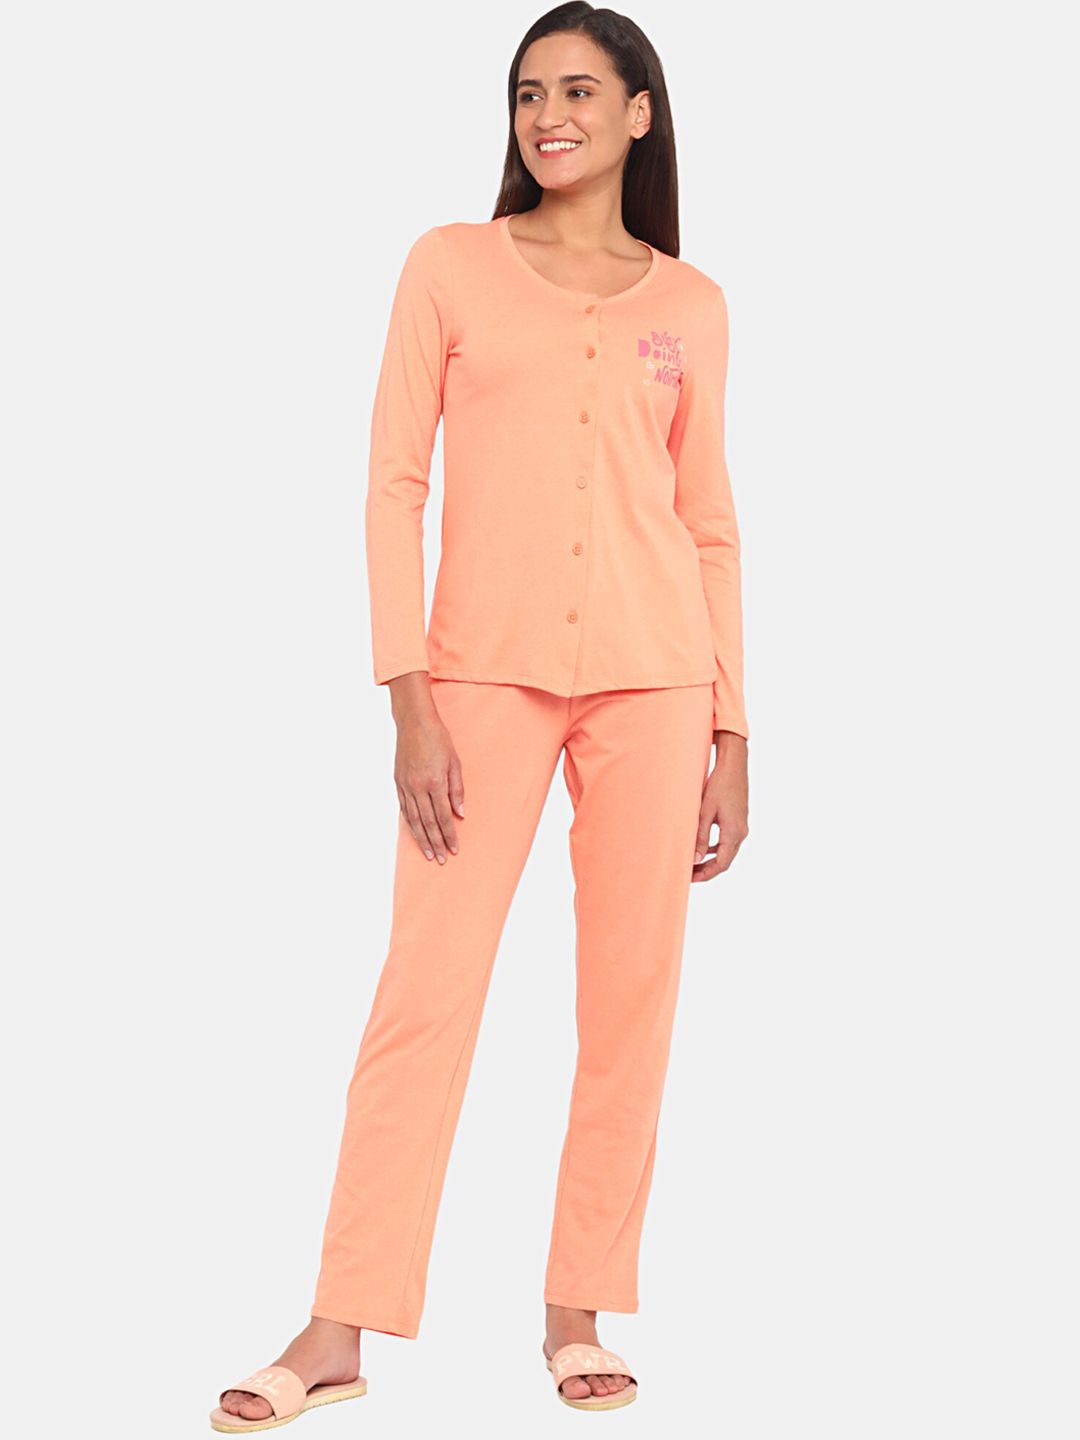 Rosaline by Zivame Women Orange Night suit Price in India